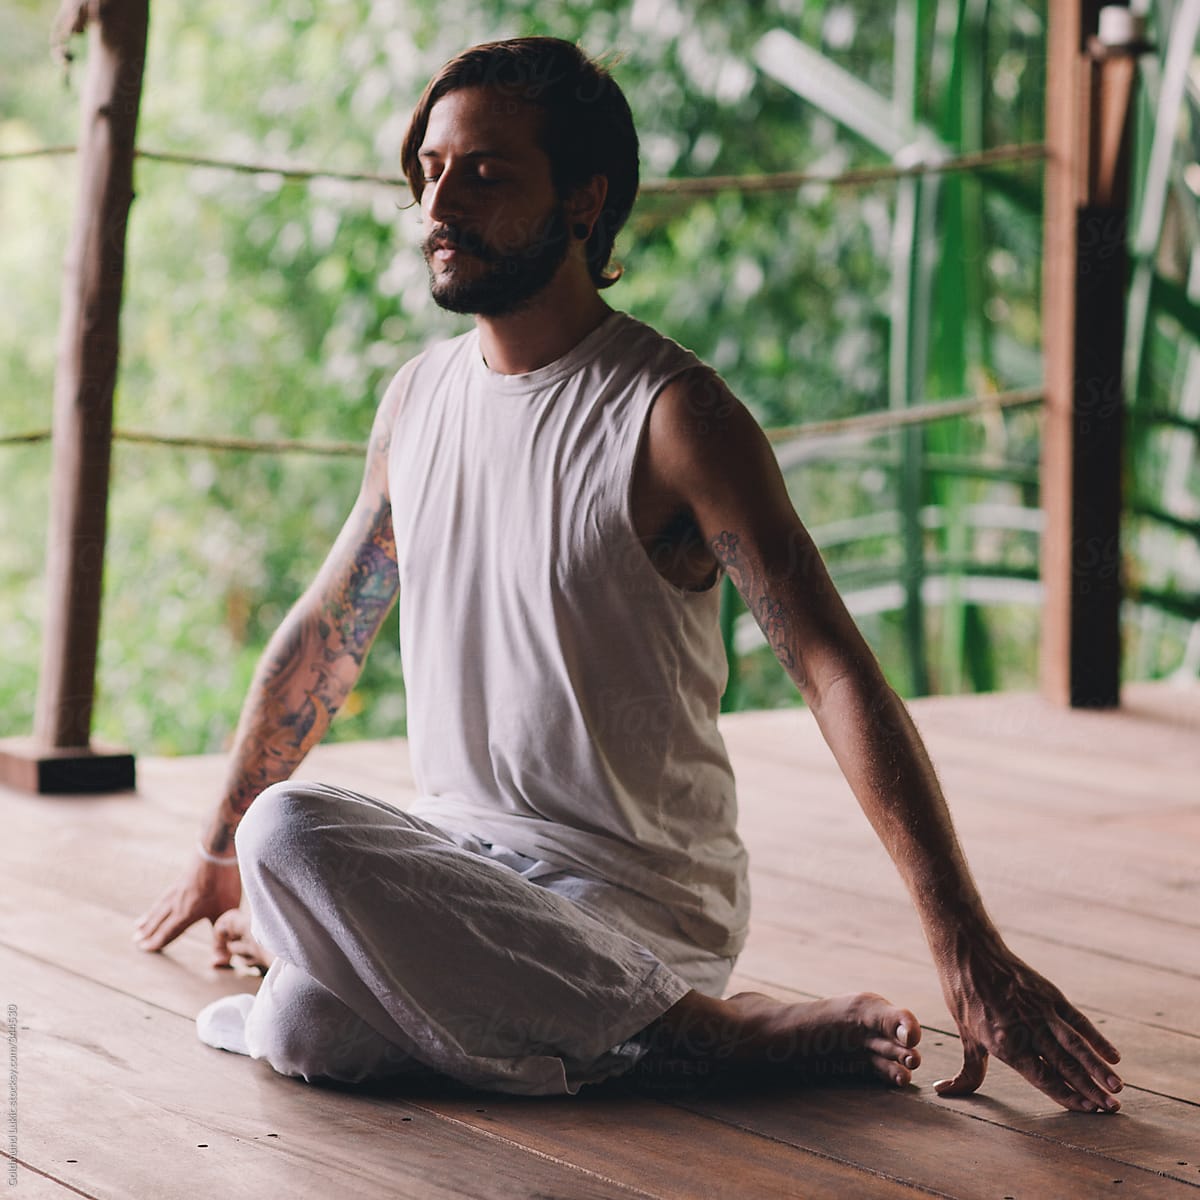 Benefits of Virasana (Hero Pose Yoga) and How to Do it By Dr. Ankit Sankhe  - PharmEasy Blog